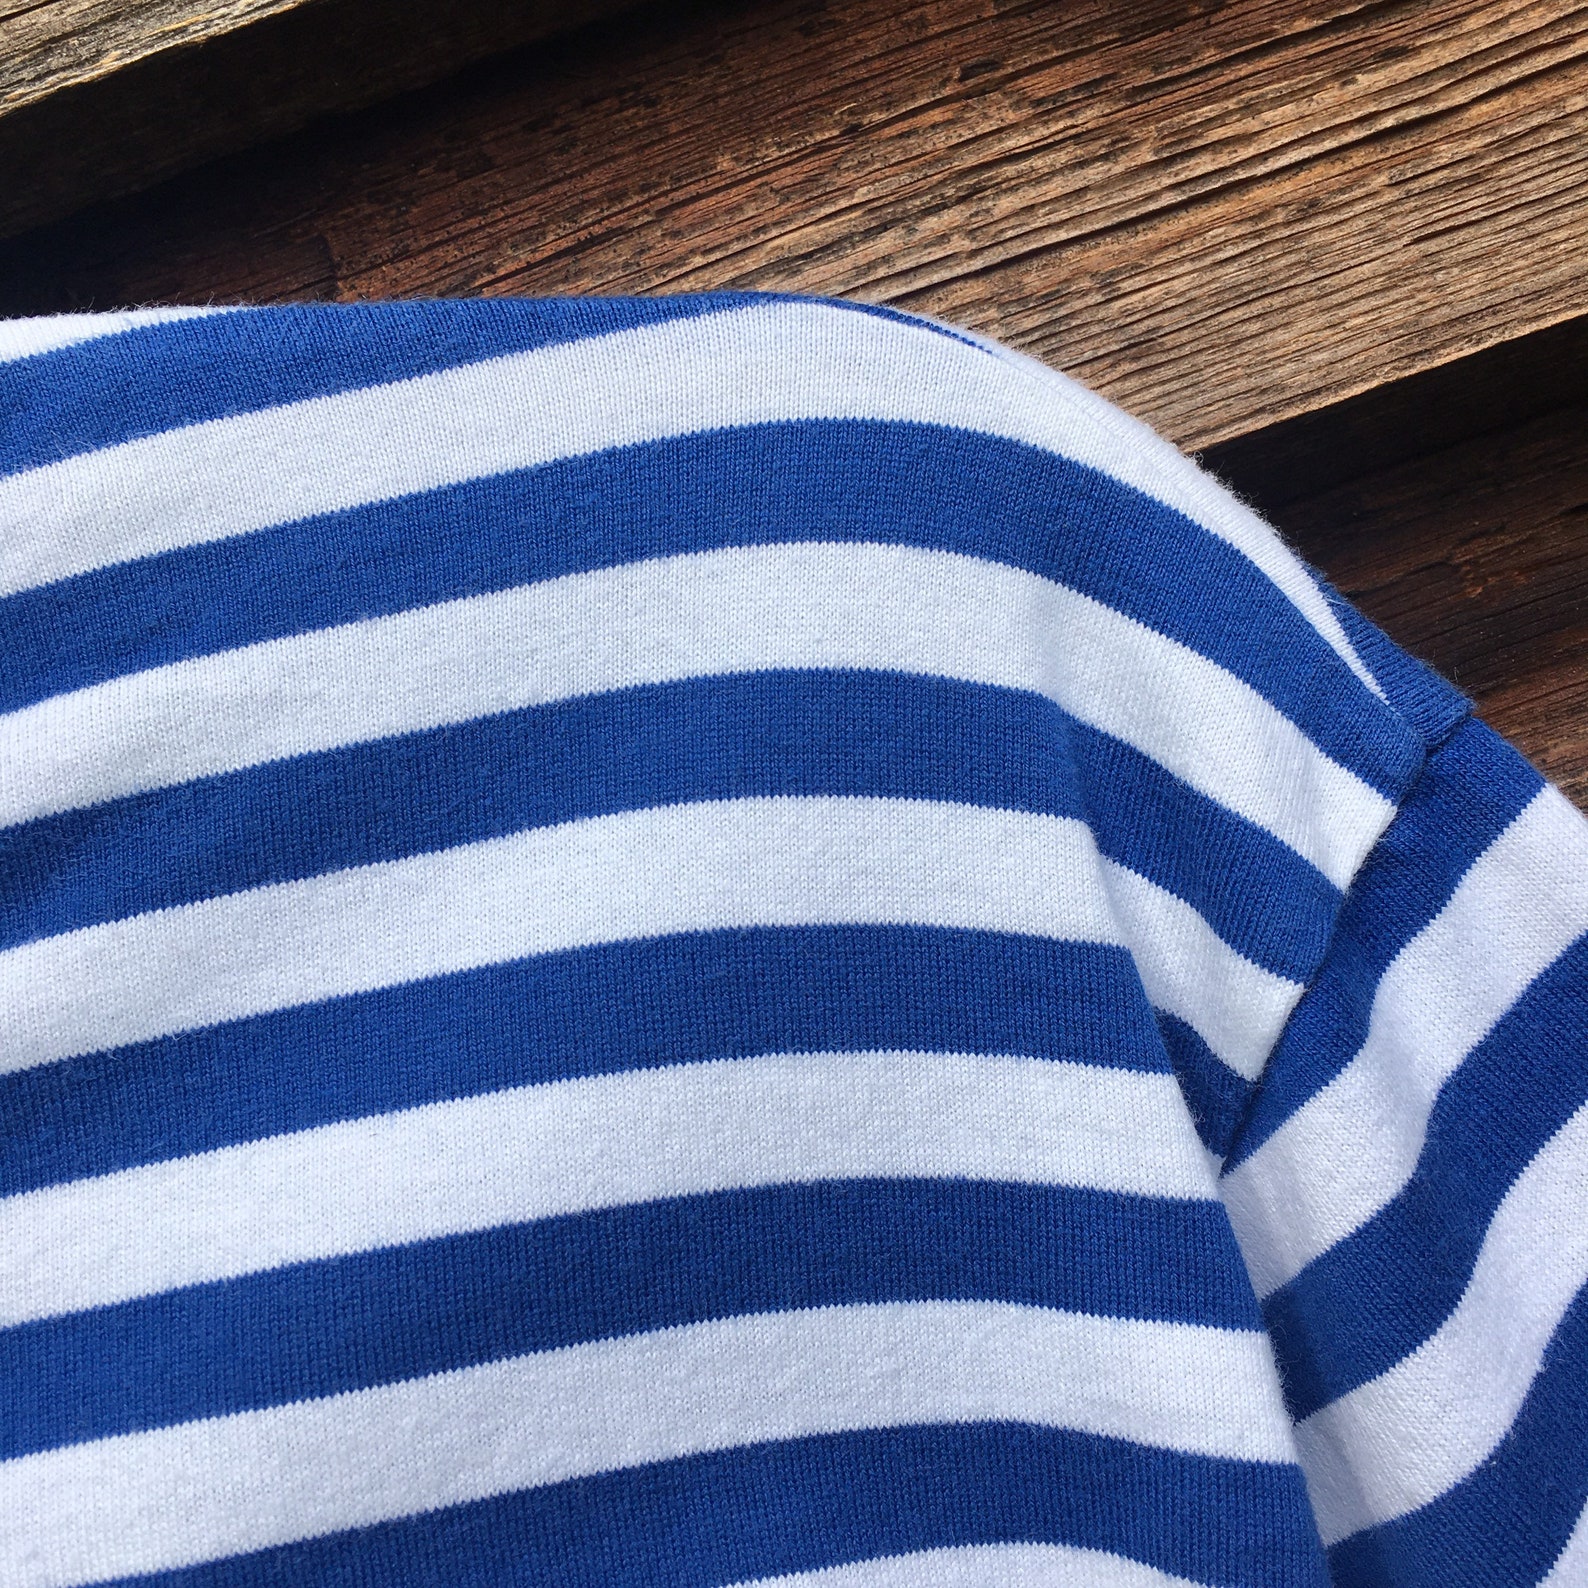 Marimekko Finnish vintage blue white striped t shirt top S-L | Etsy